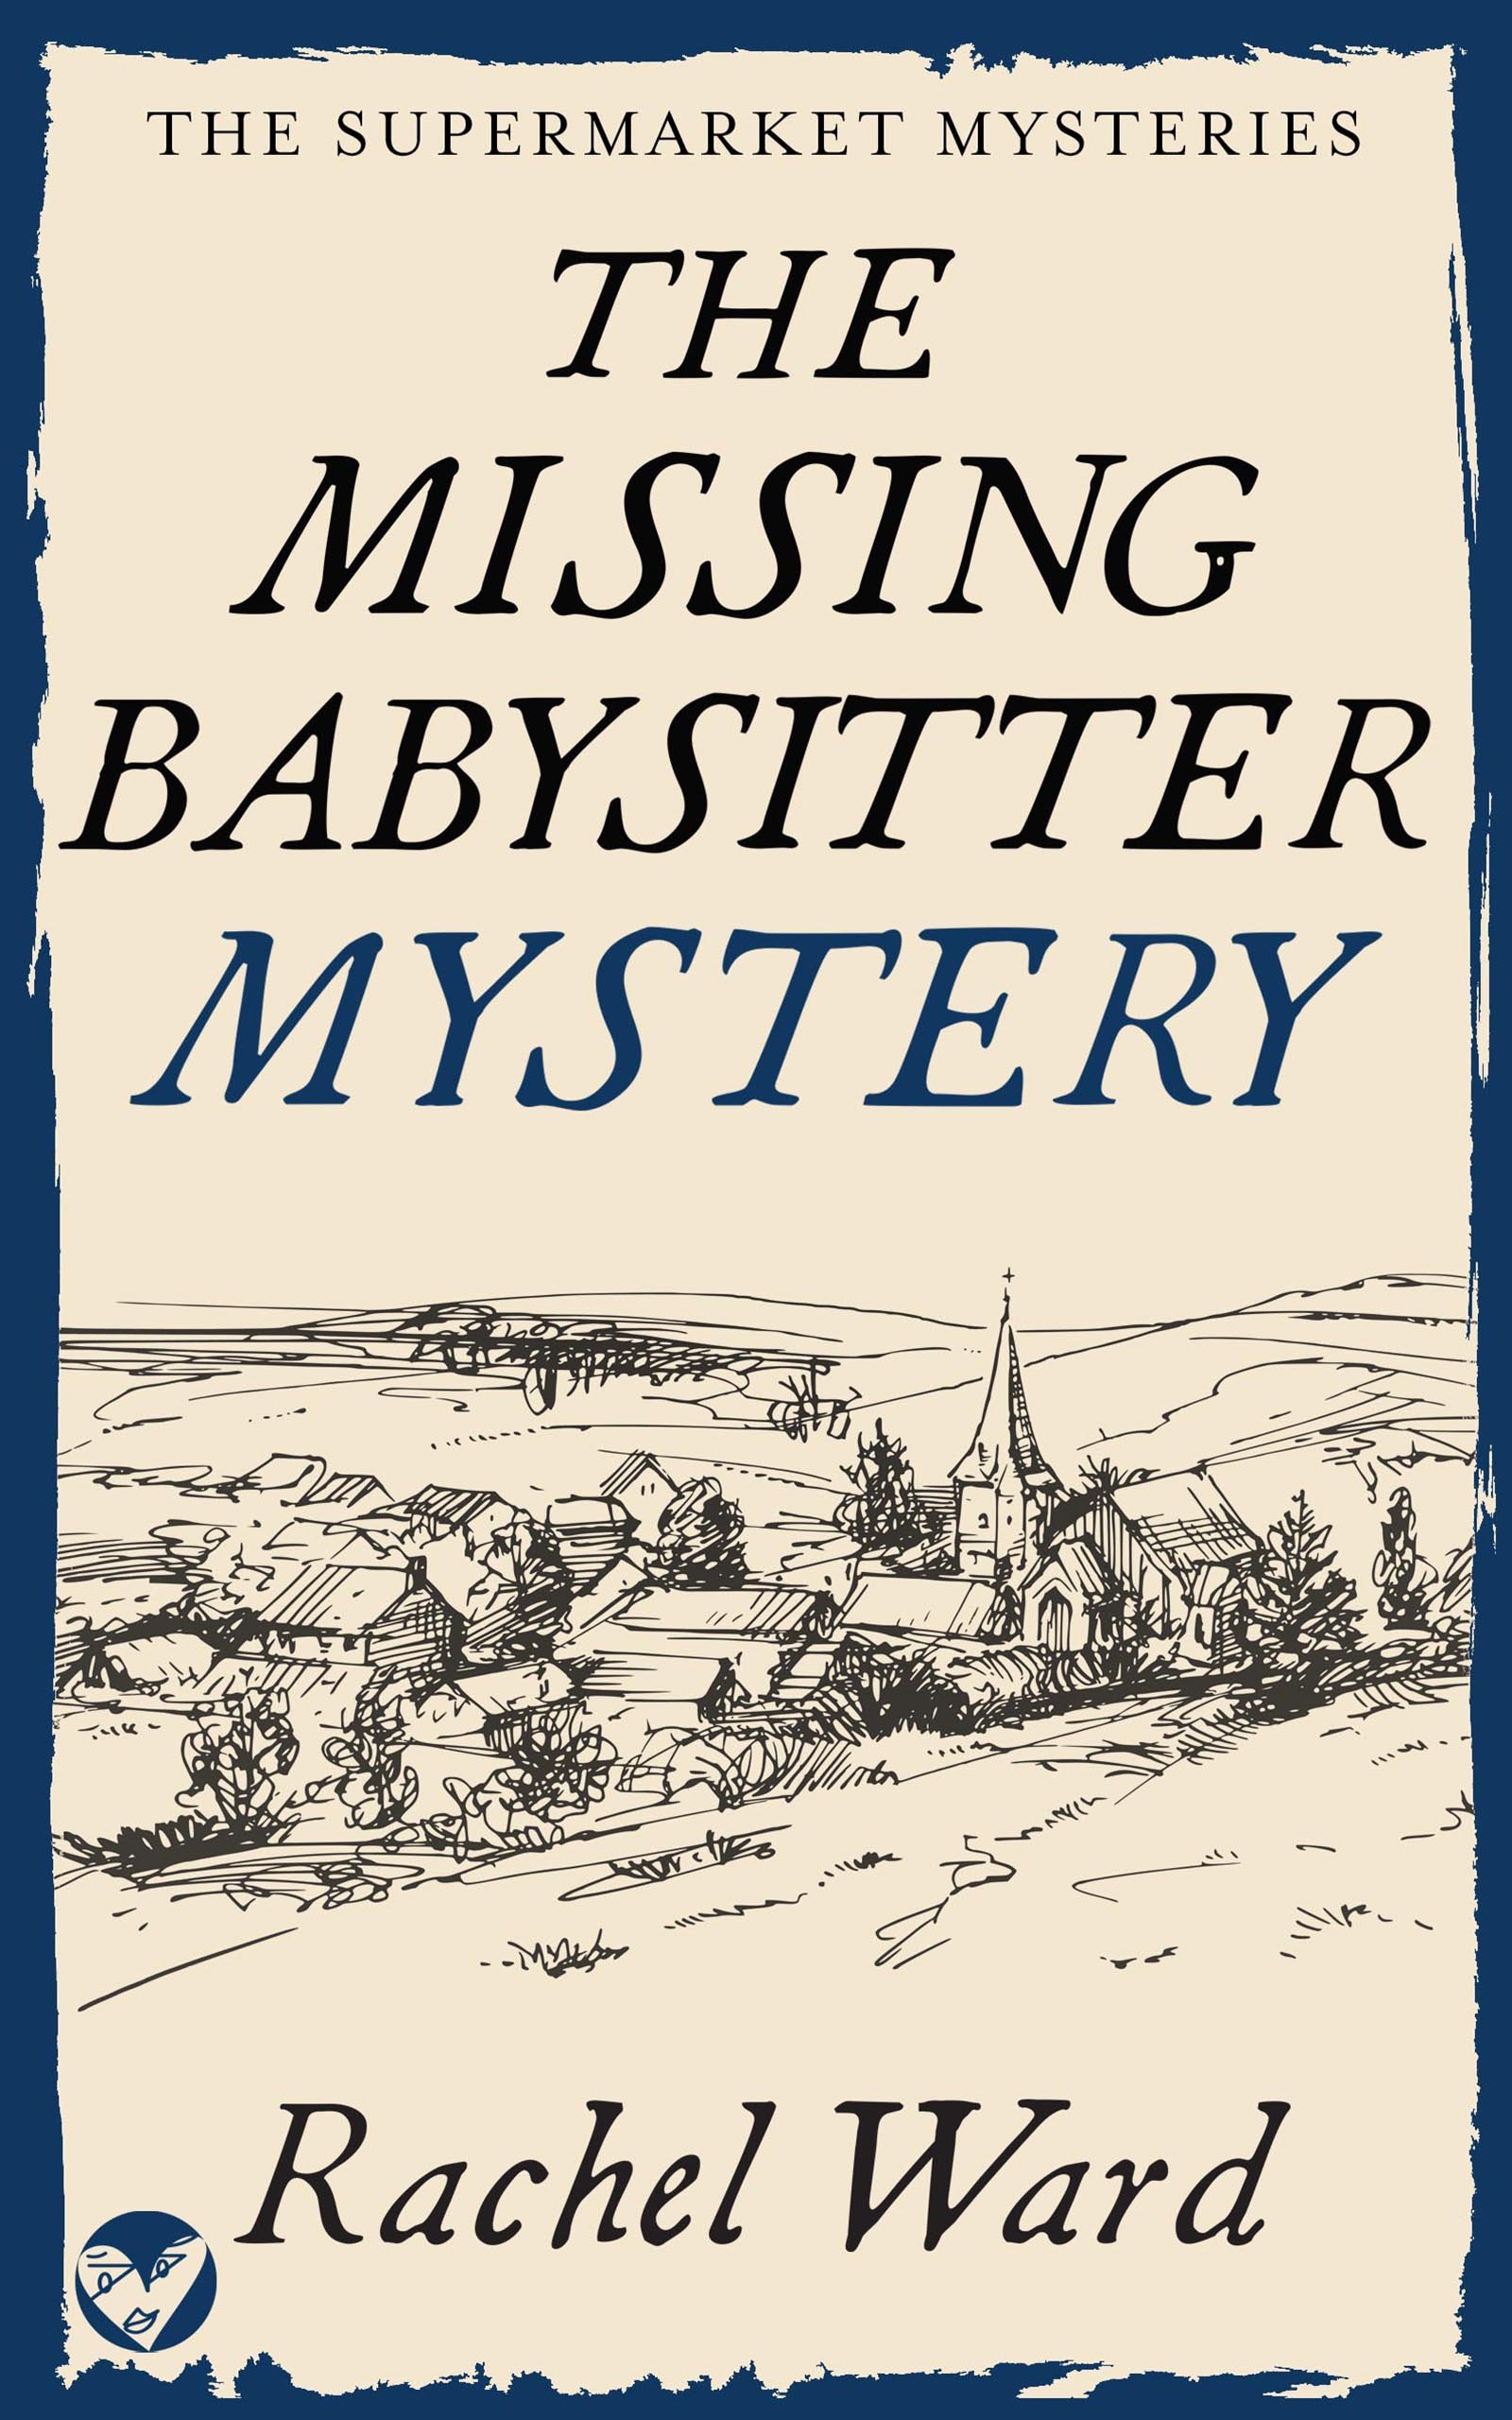 THE MISSING BABYSITTER MYSTERY Cover publish.jpg